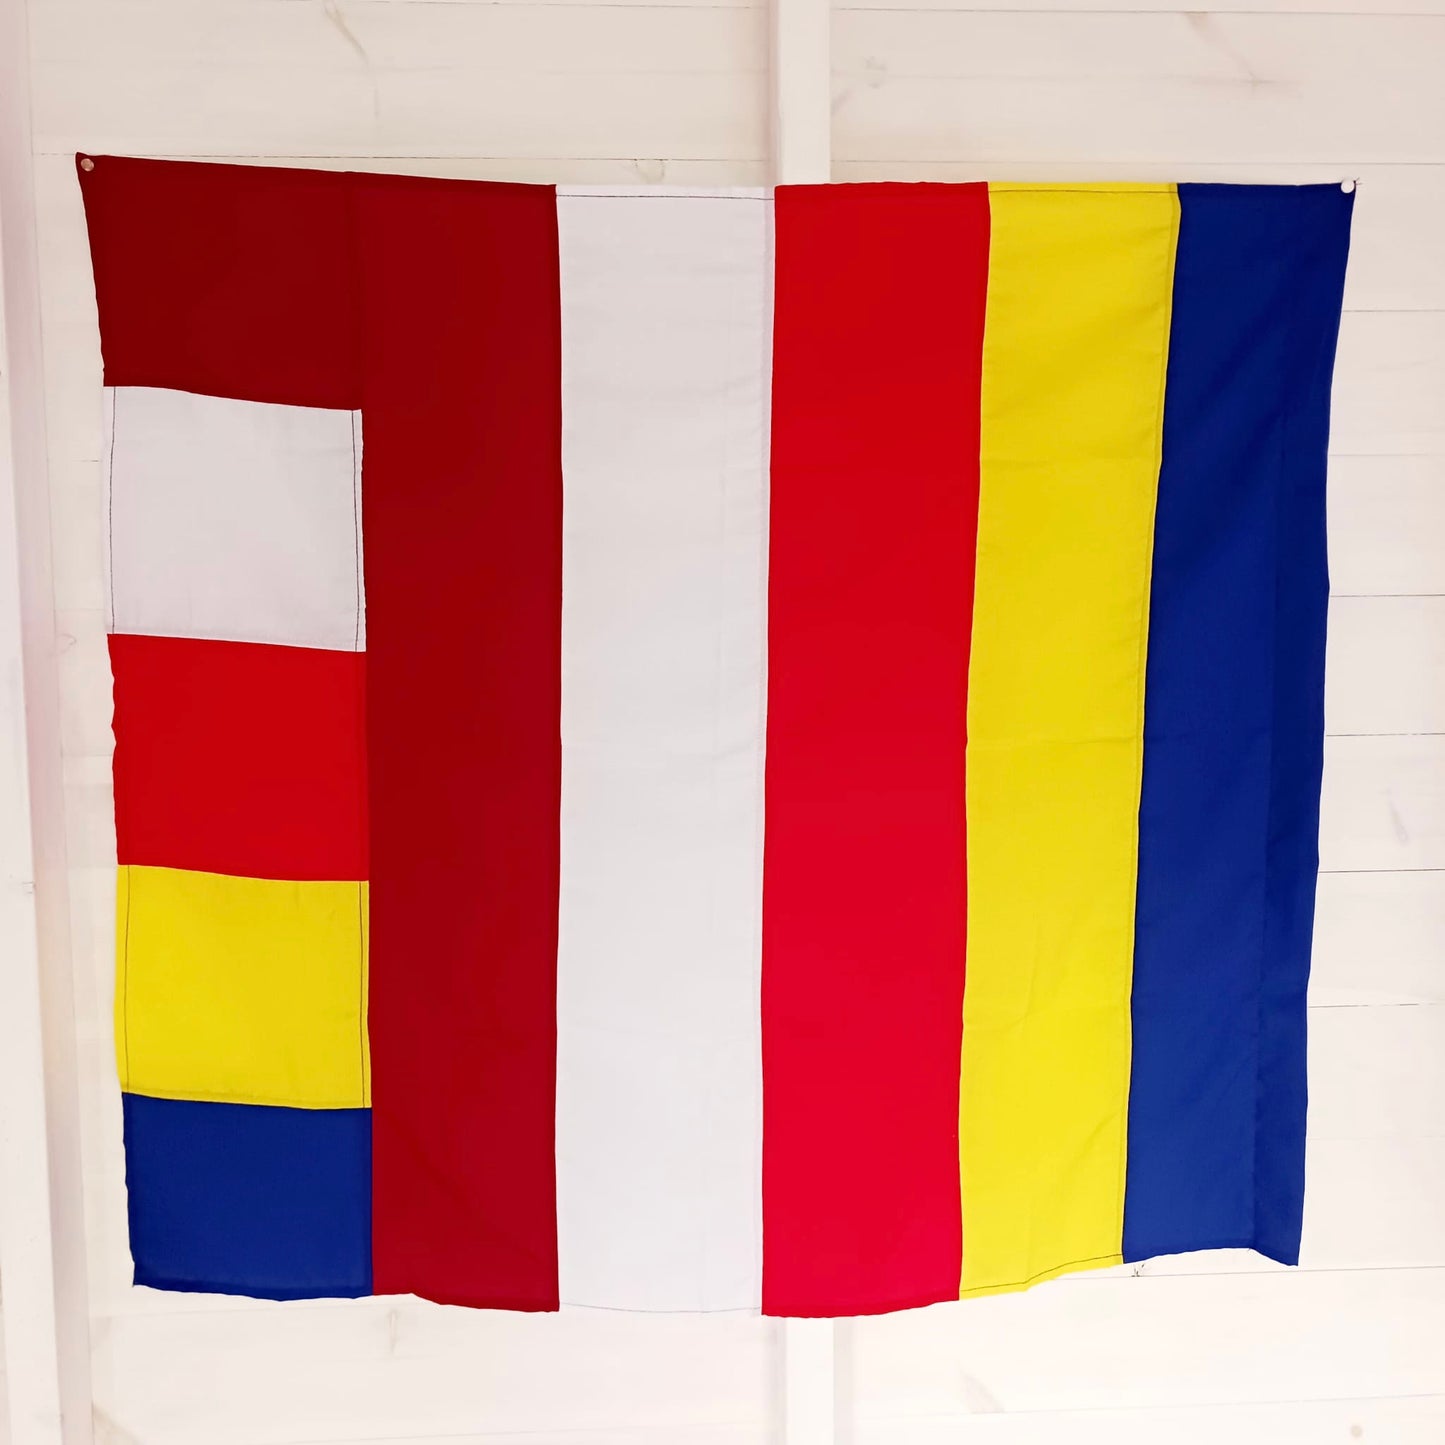 Universal Buddhist Flag 89 x 93 cm